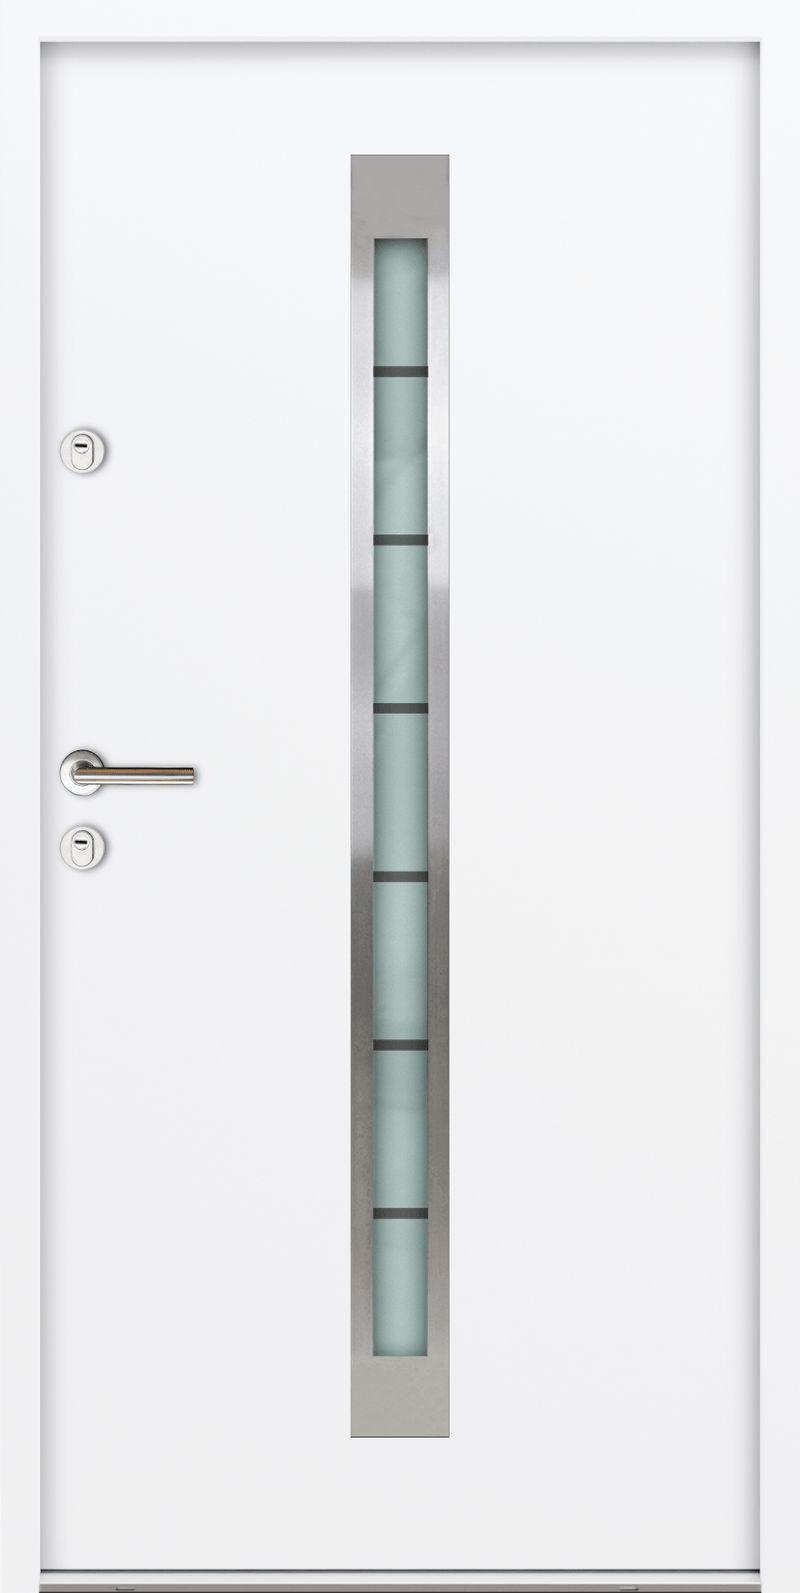 Turenwerke ATU 68 Design 20 Steel Door - White